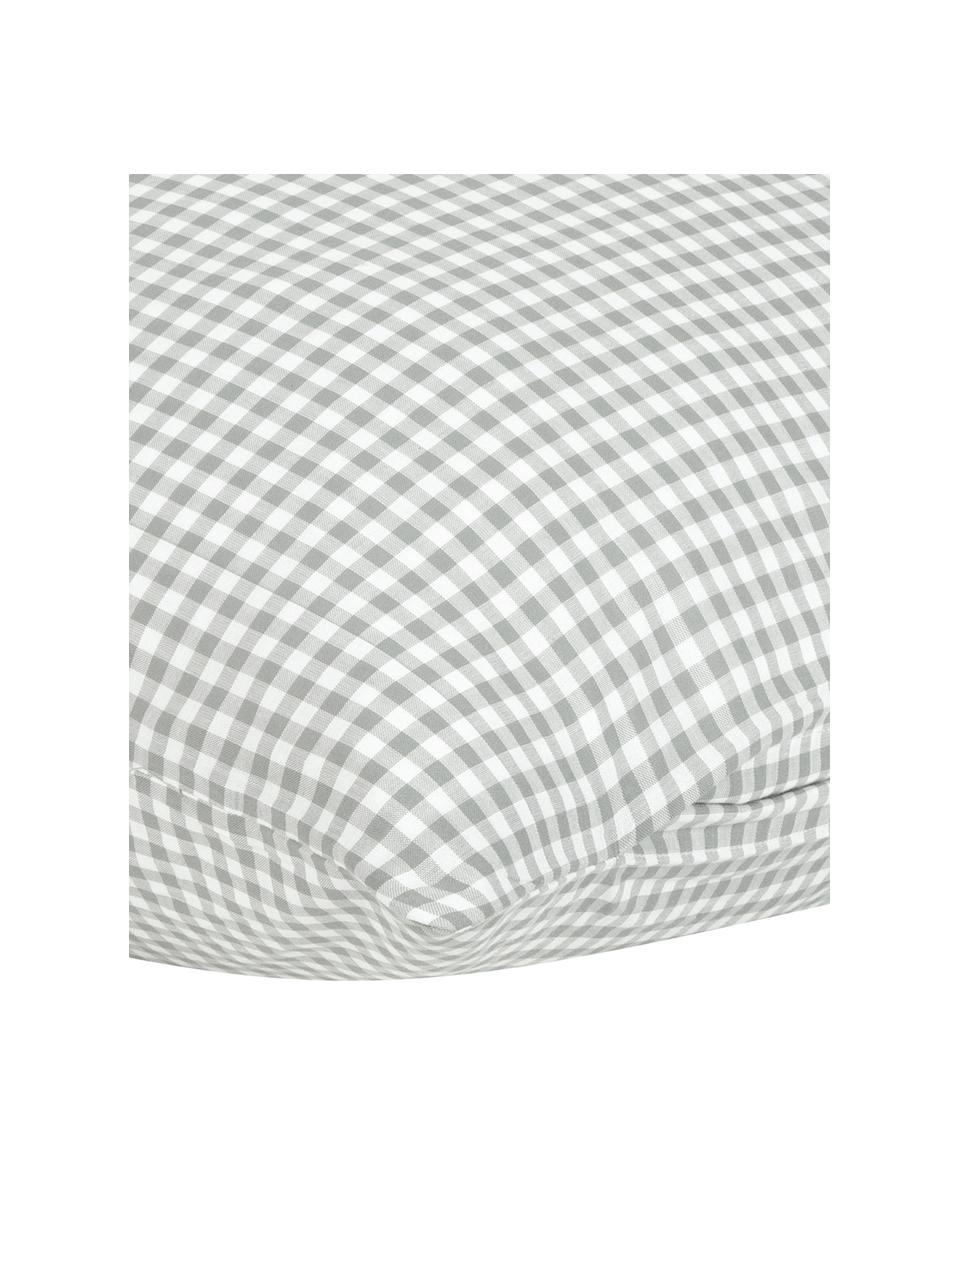 Baumwoll-Kissenbezug Scotty, kariert, 65 x 65 cm, Baumwolle, Hellgrau/Weiss, B 65 x L 65 cm